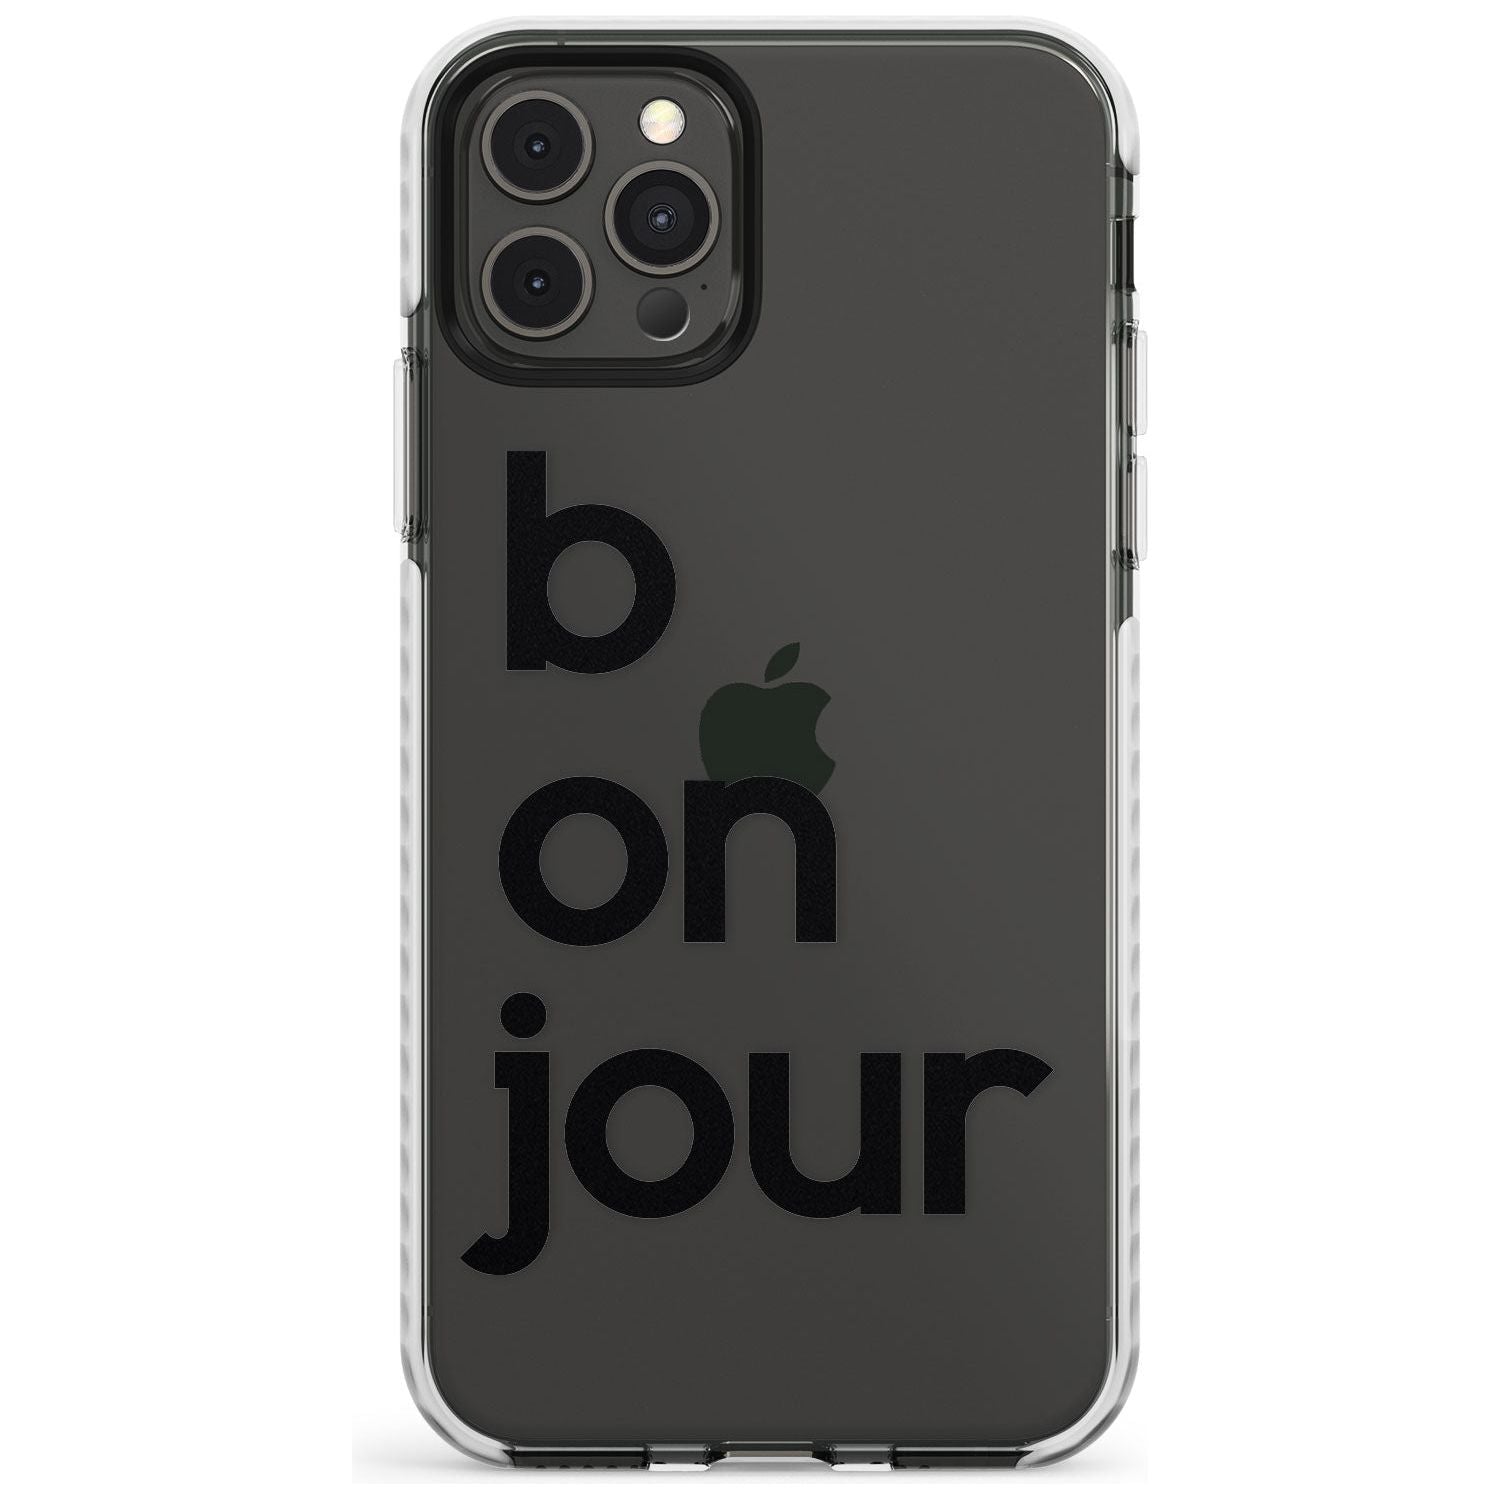 Bonjour Slim TPU Phone Case for iPhone 11 Pro Max